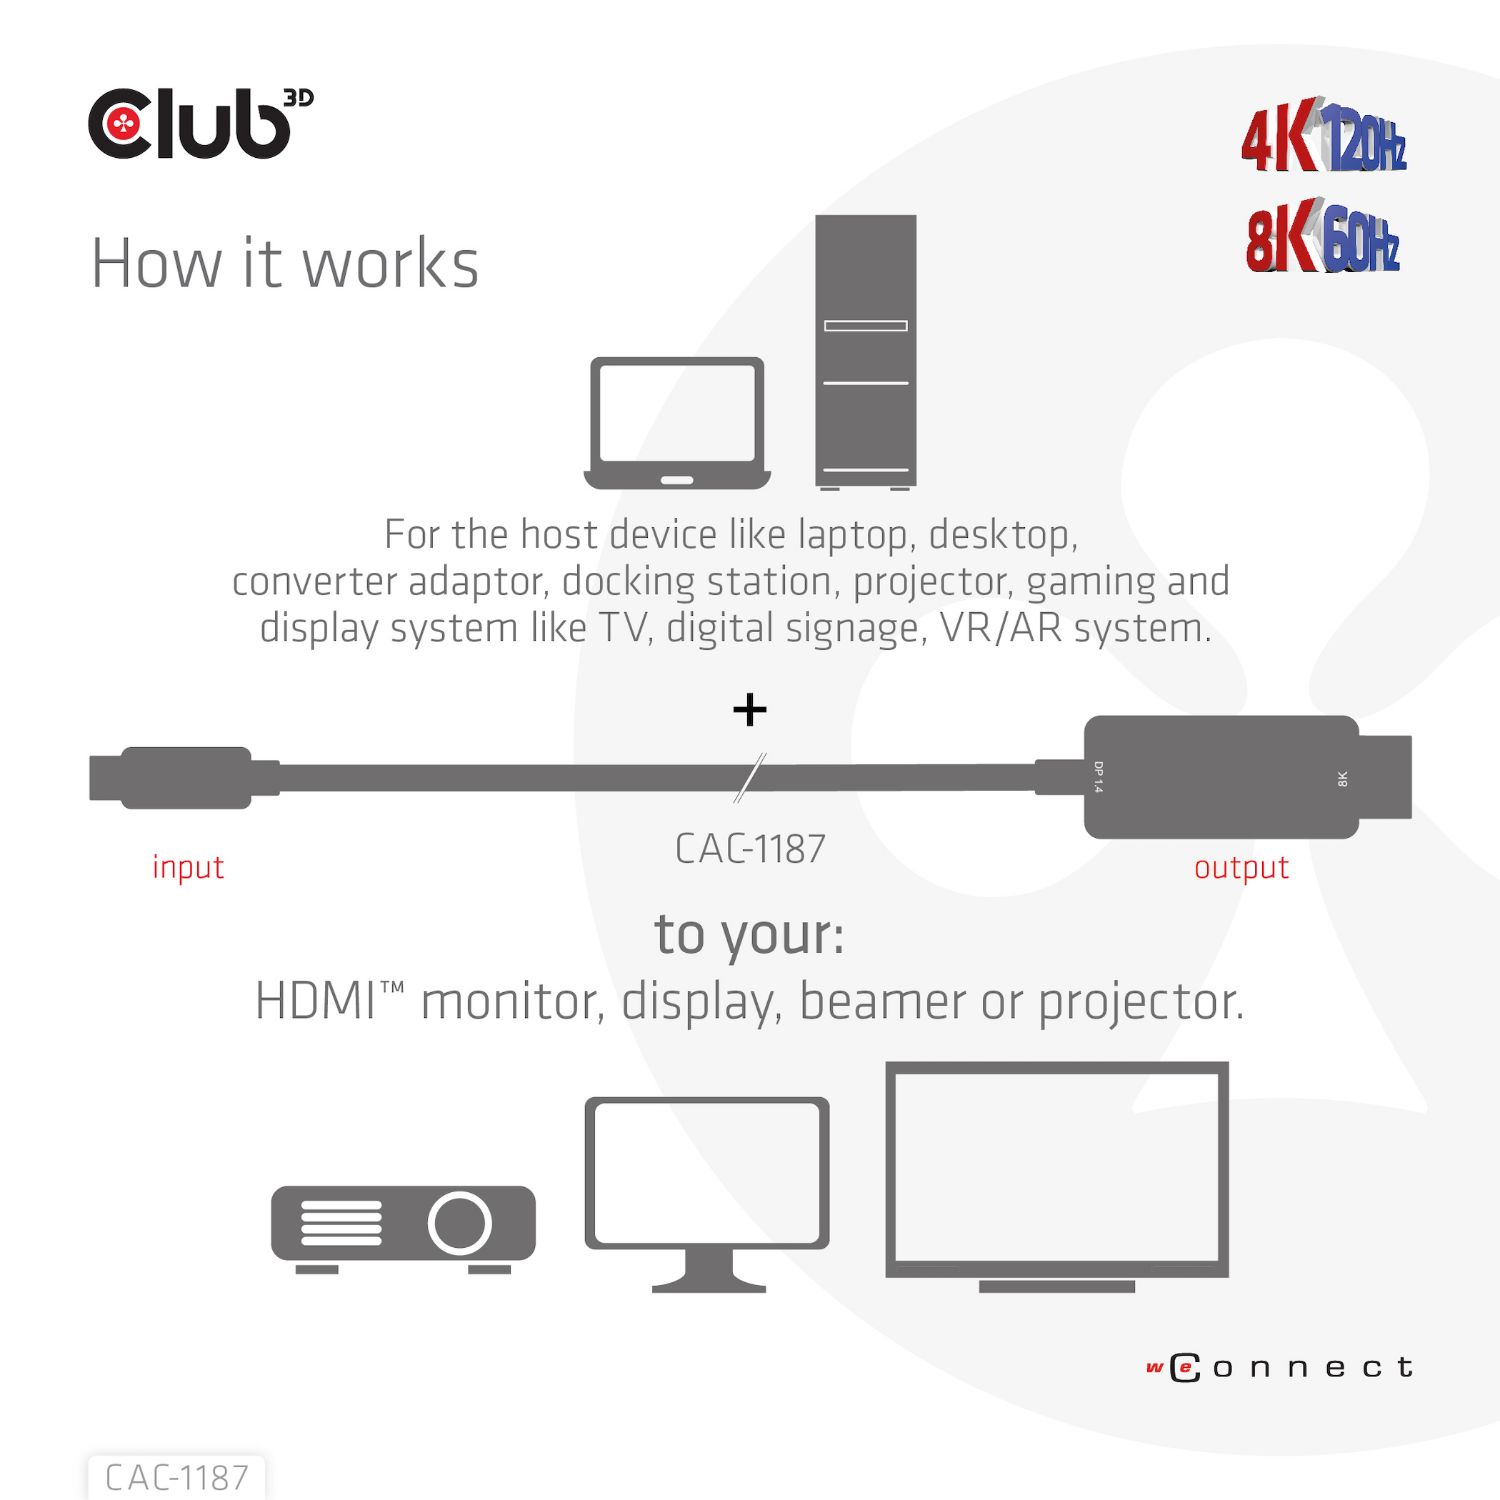 CAC-1187 - Cable Club3D mini DisplayPort 1.4 a HDMI 4K120HZ 8K 60Hz HDR 1.8m (CAC-1187)